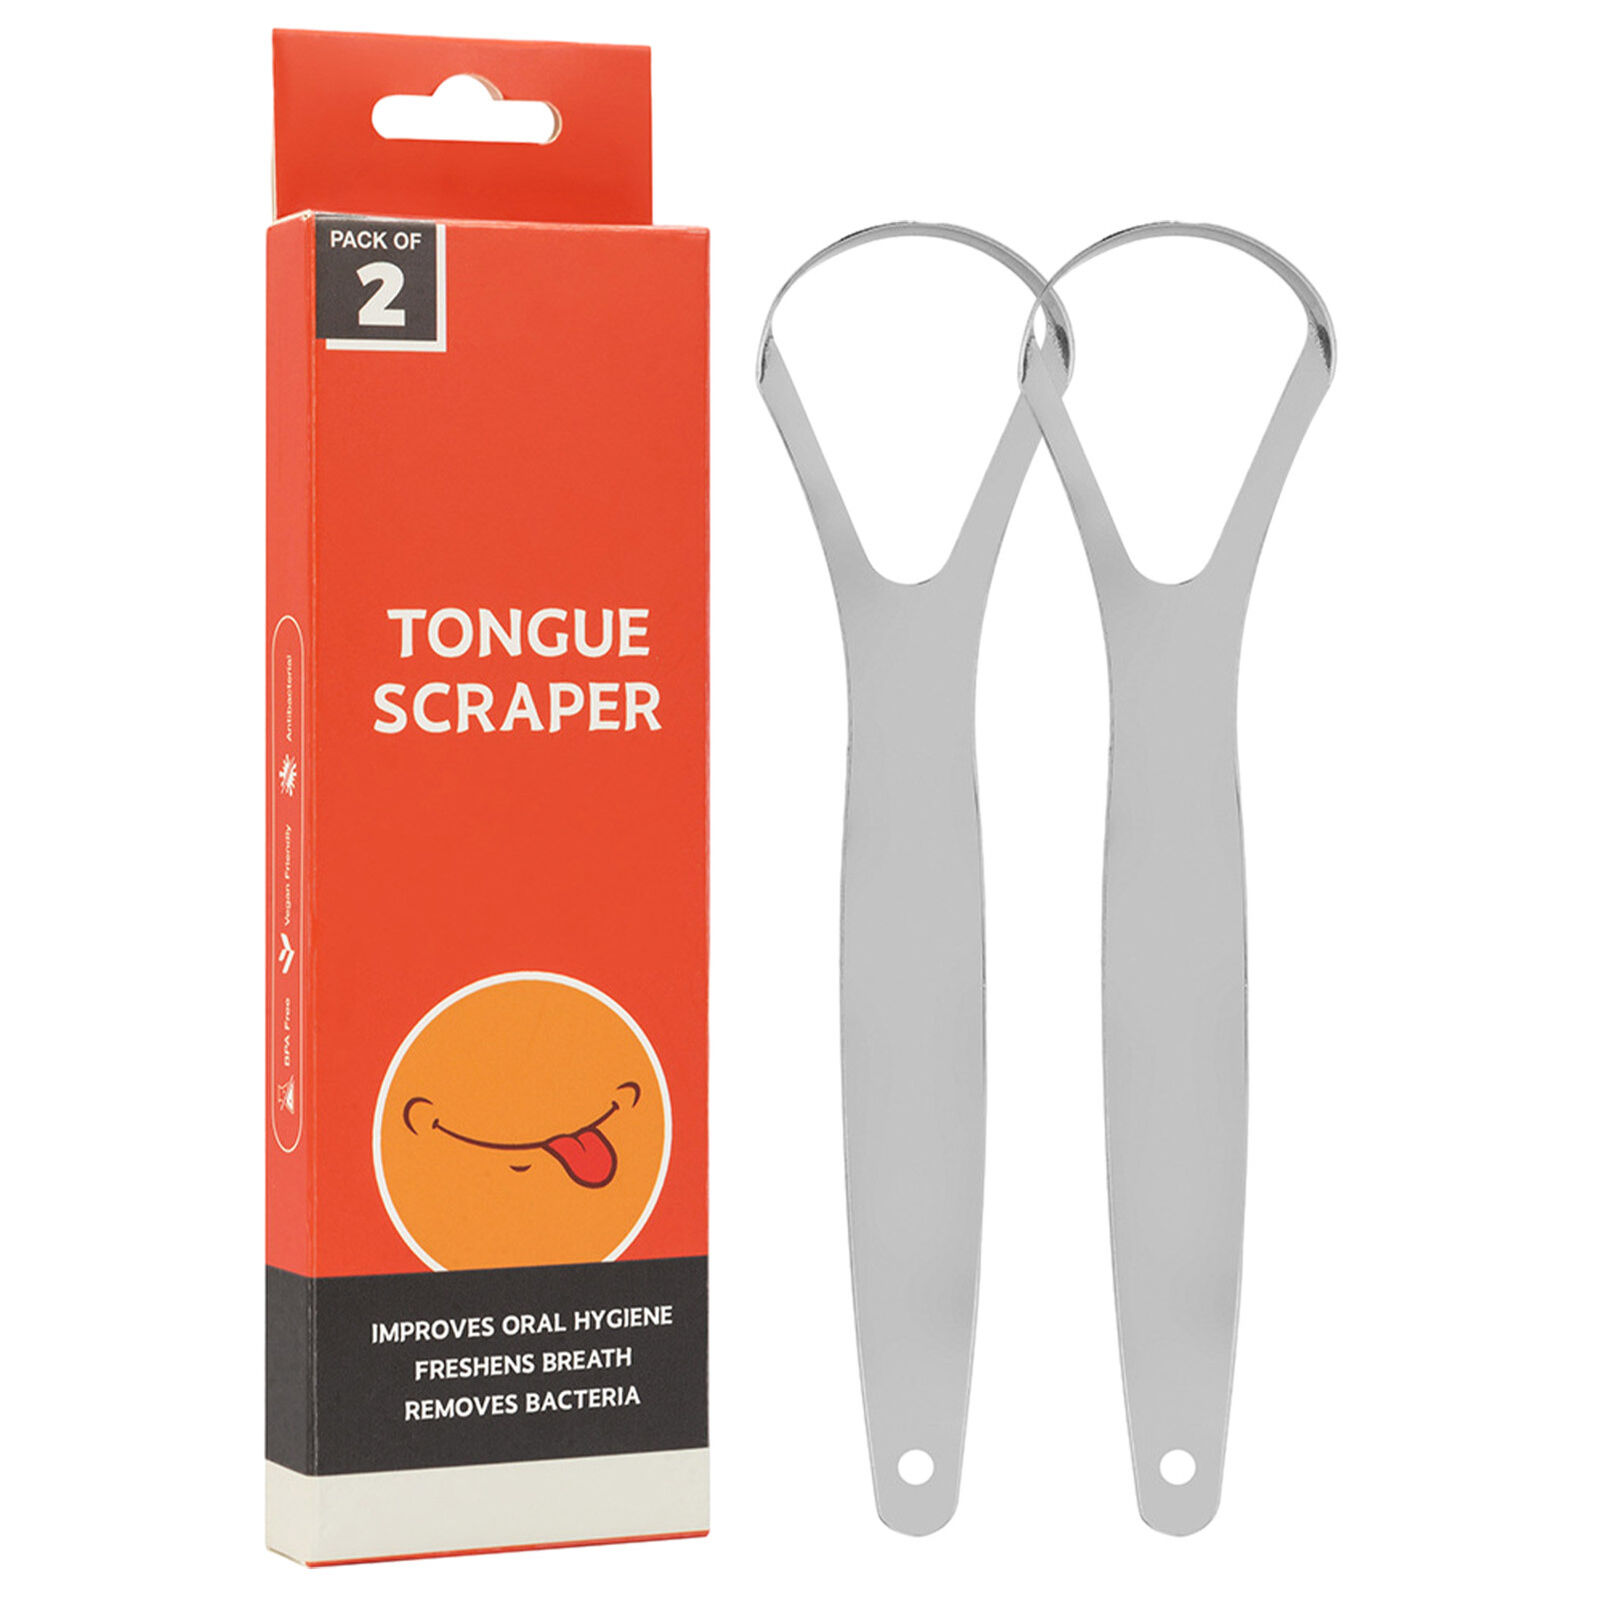 Stainless Steel Tongue Scraper Cleaner Bad Breath Oral Health Cleaning Metal